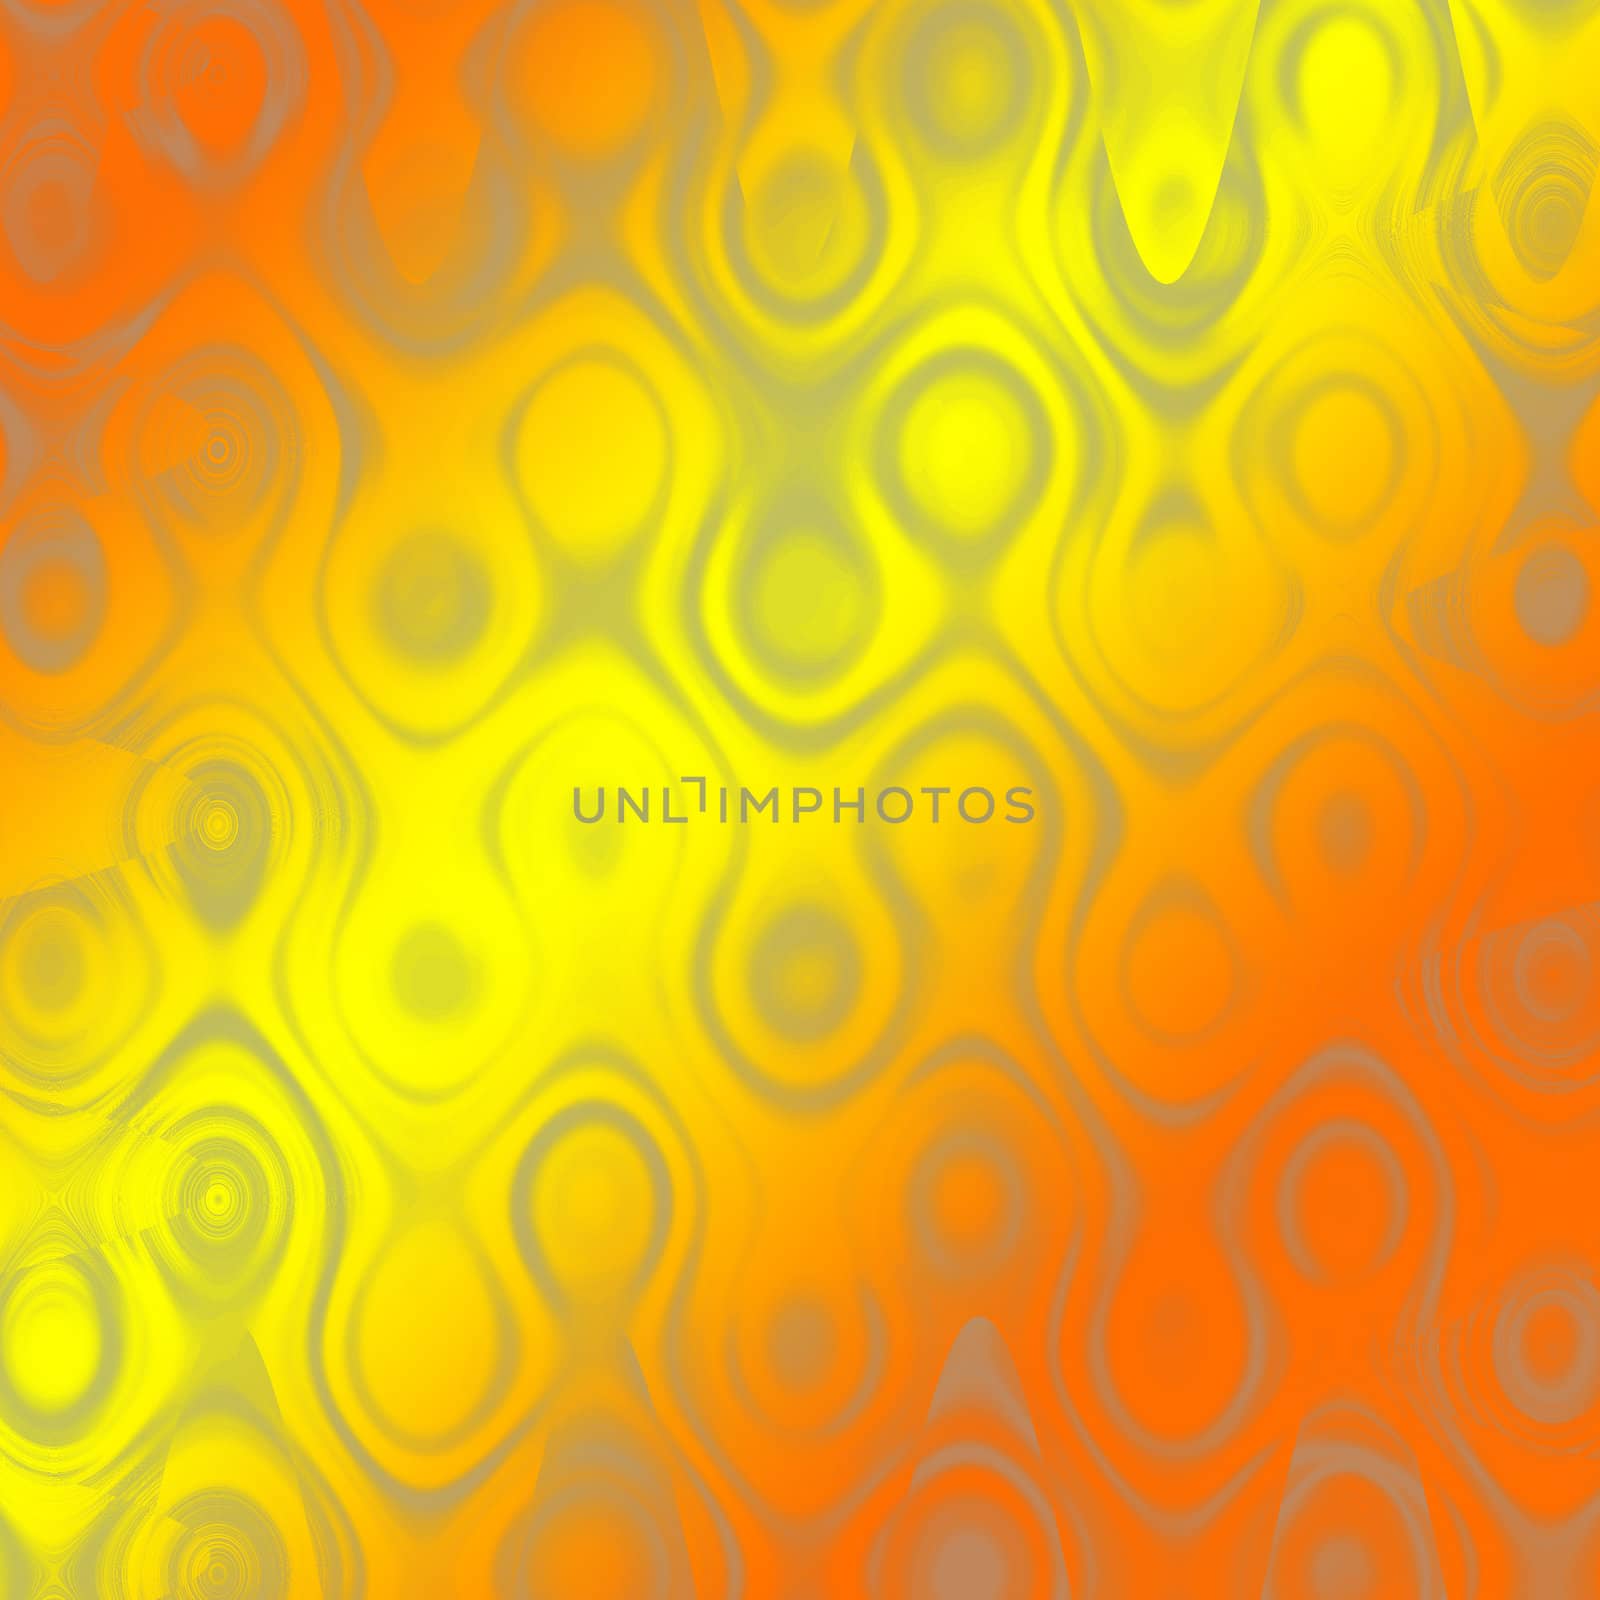 background abstract yellow orange strange round patterns